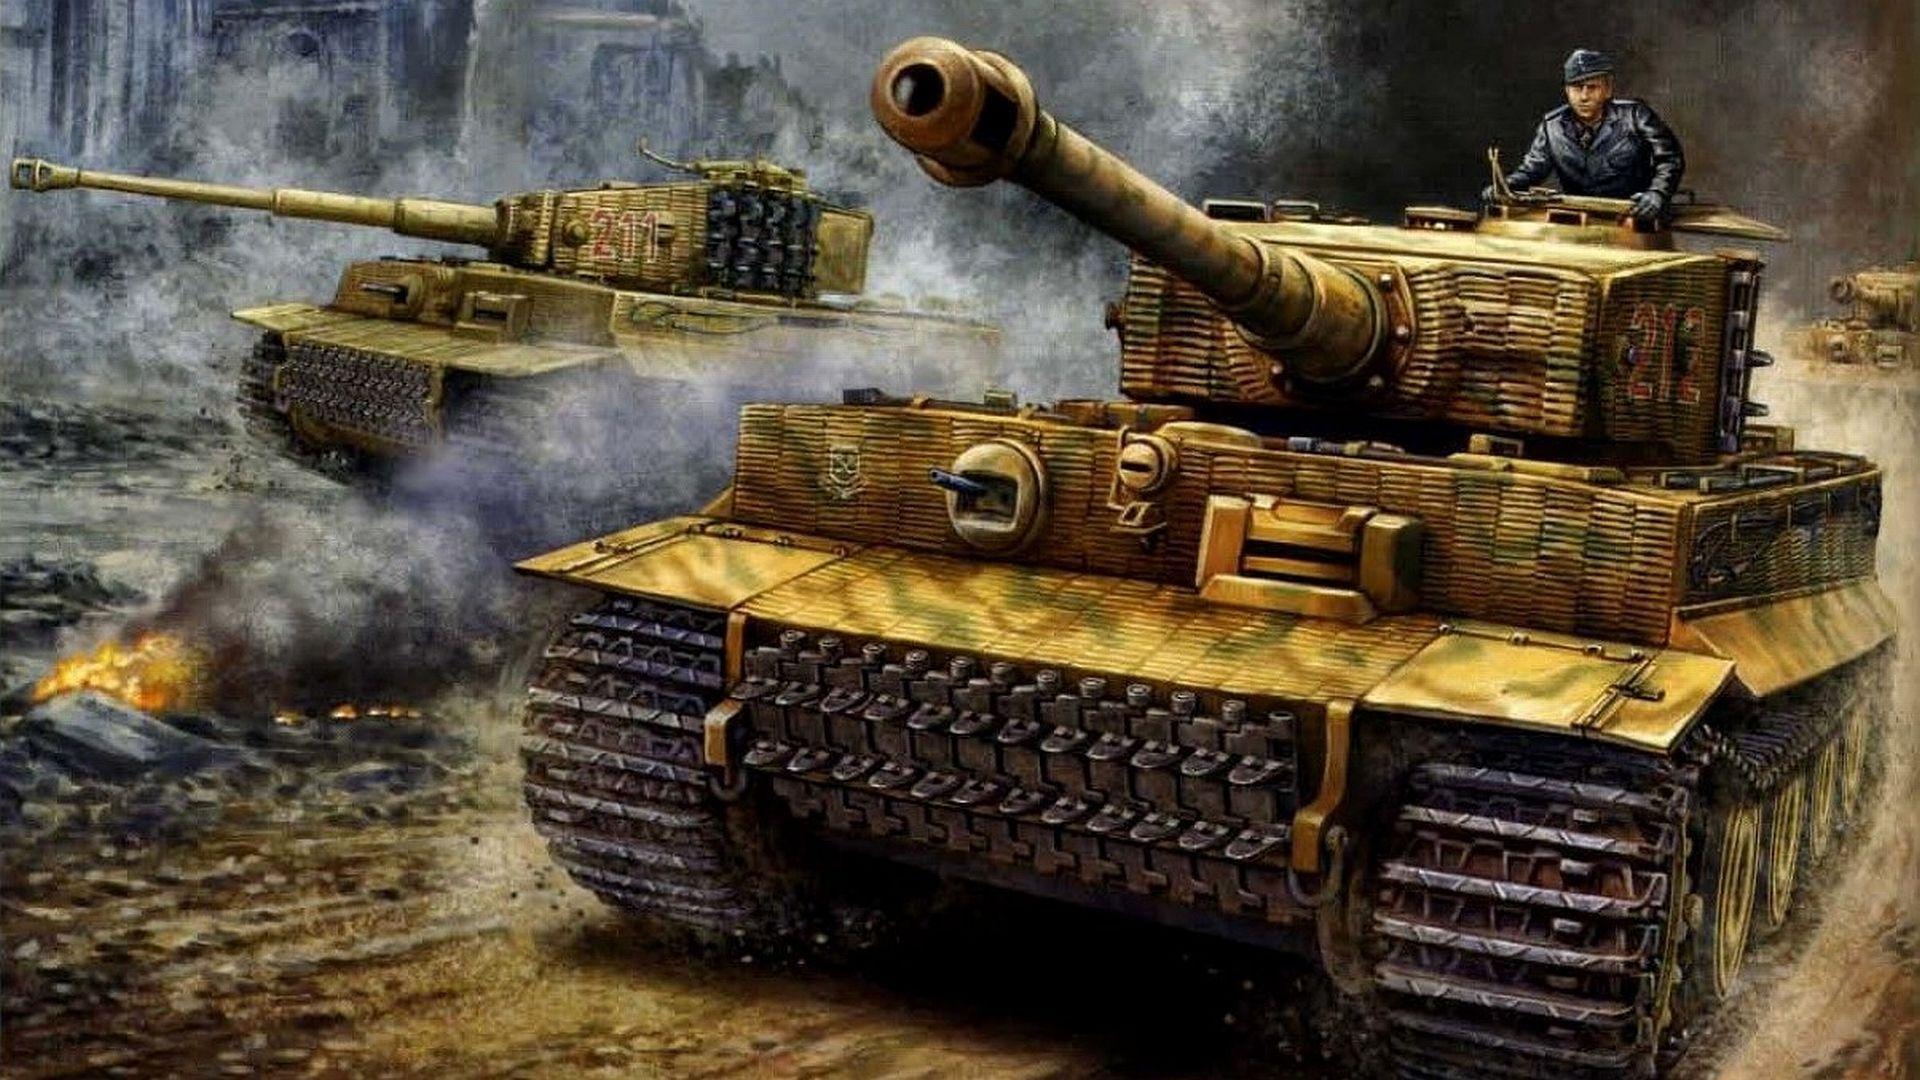 German Ww2 Tank Wallpapers Top Free German Ww2 Tank Backgrounds